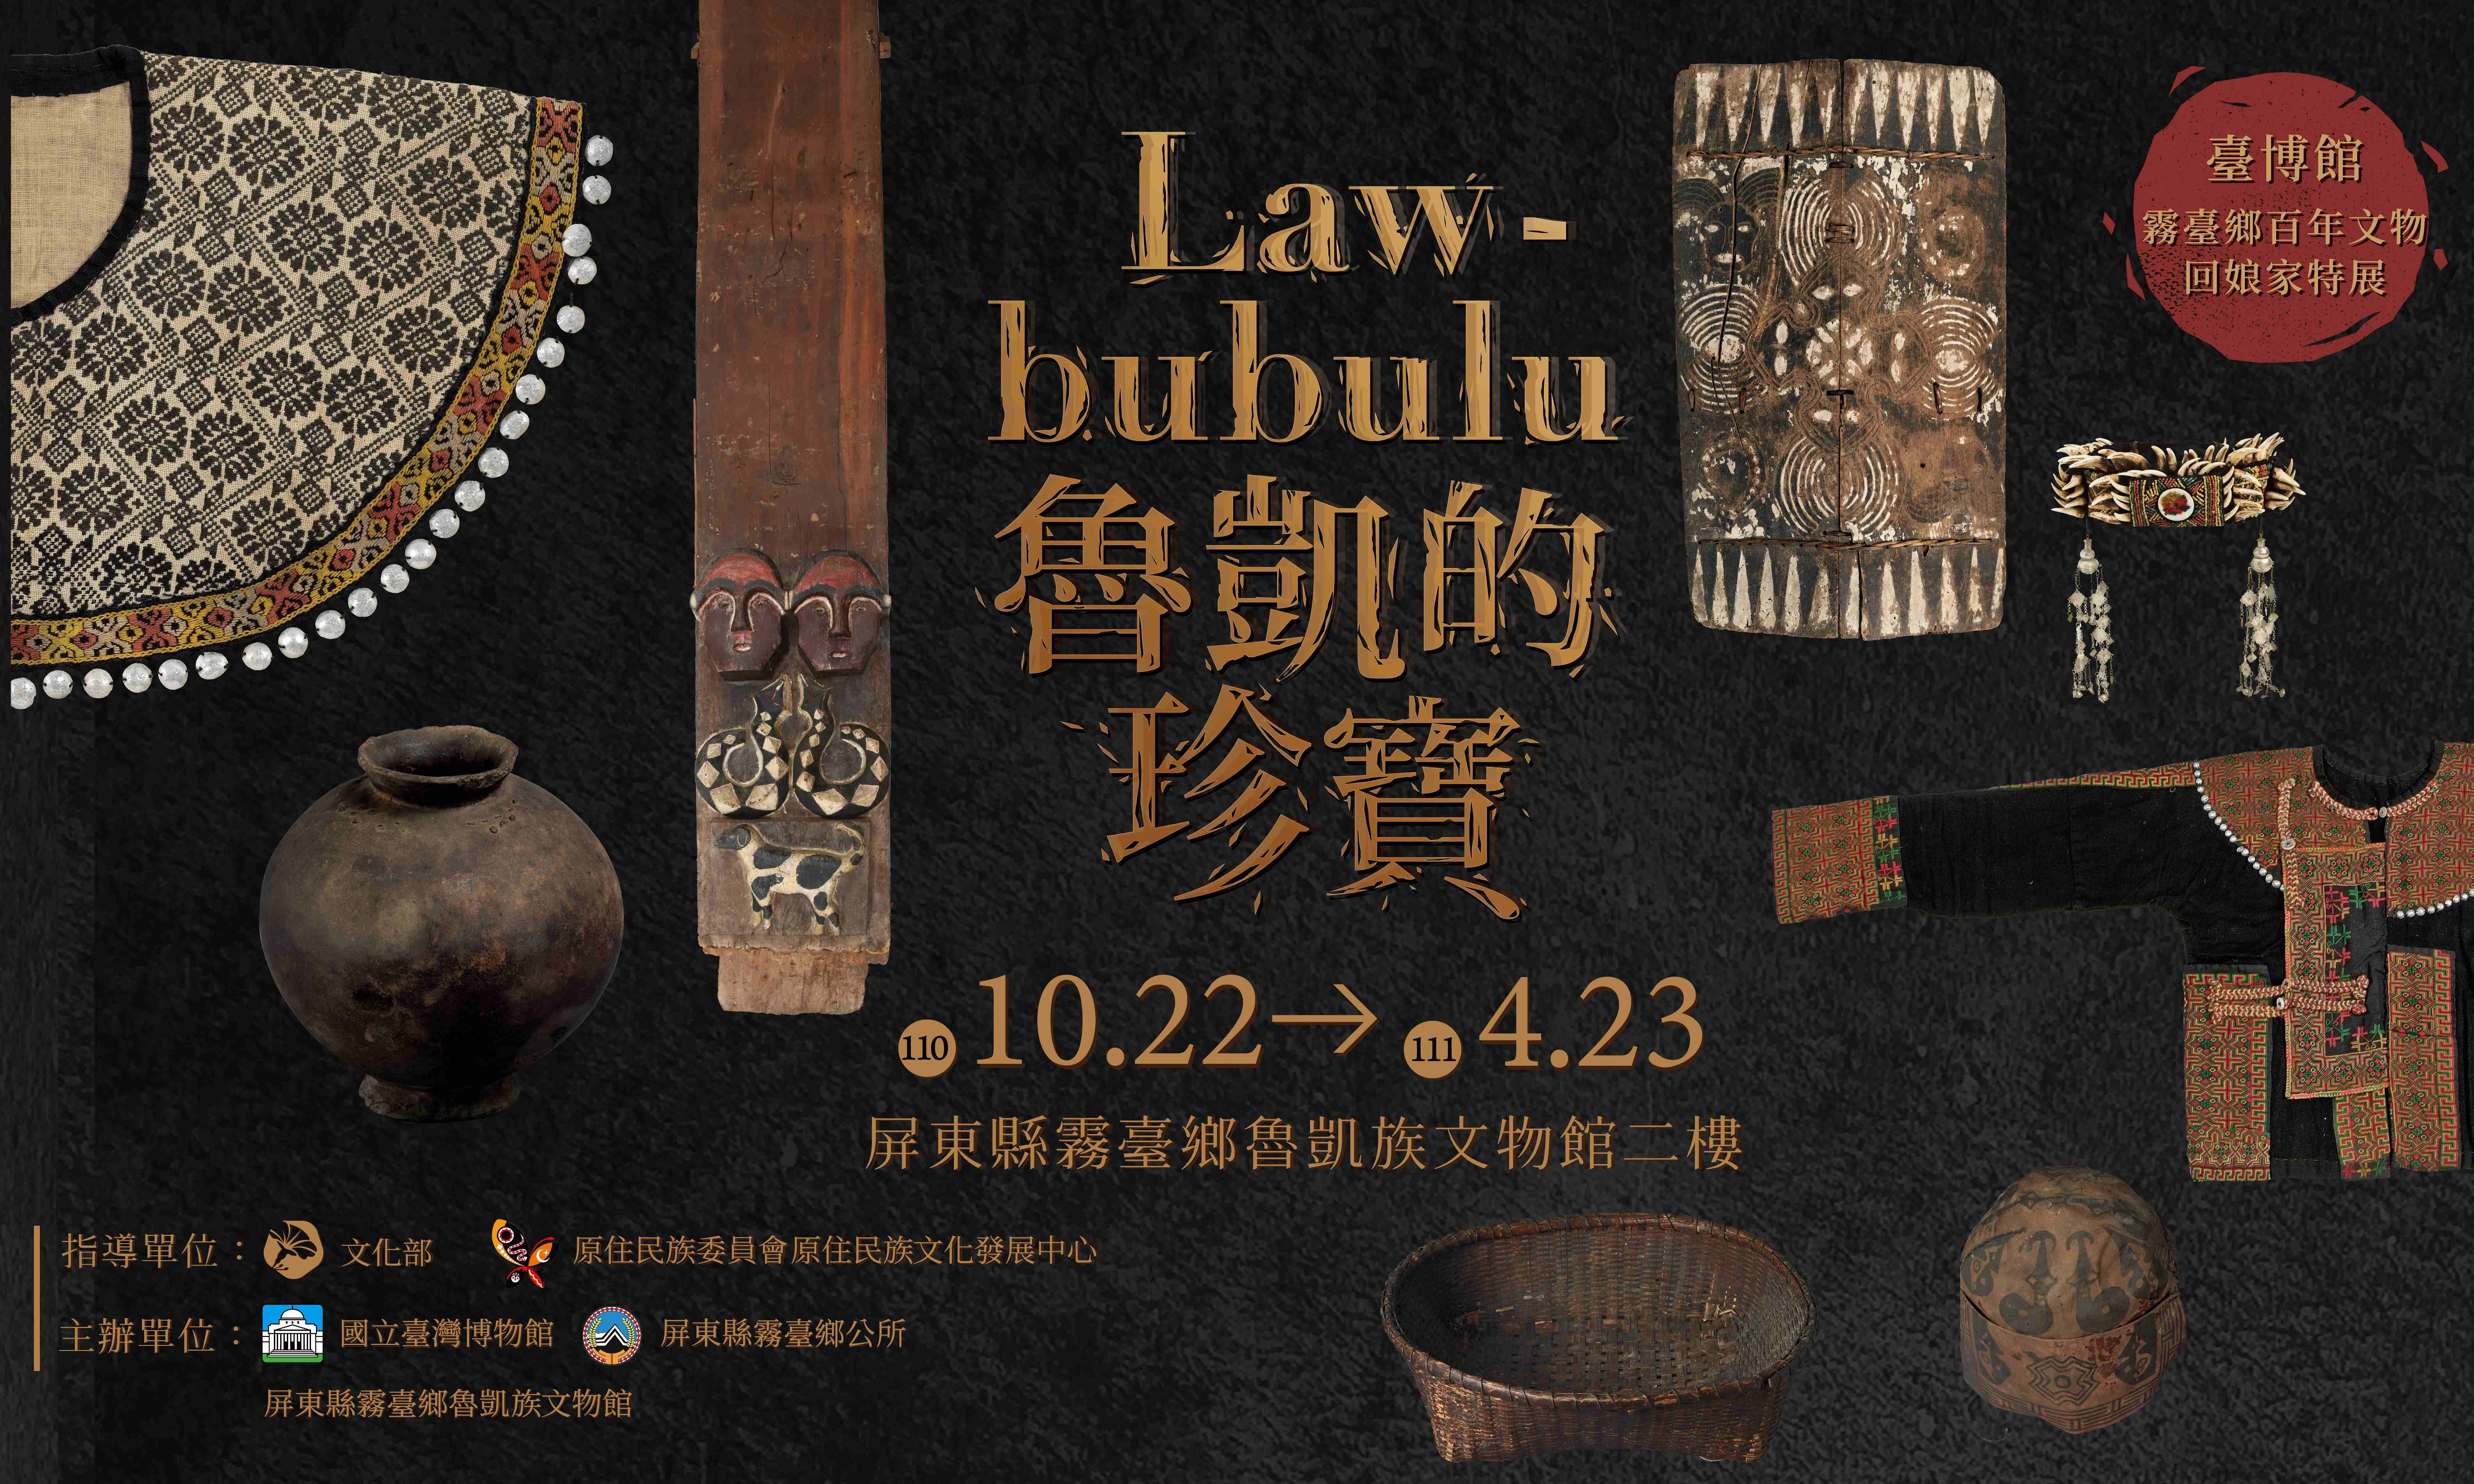 Harta Karun Lawbubulu Drekai – Pameran Khusus Peninggalan Budaya Berusia Seabad Desa Vudai Museum Nasional Taiwan Di Kampung Halaman